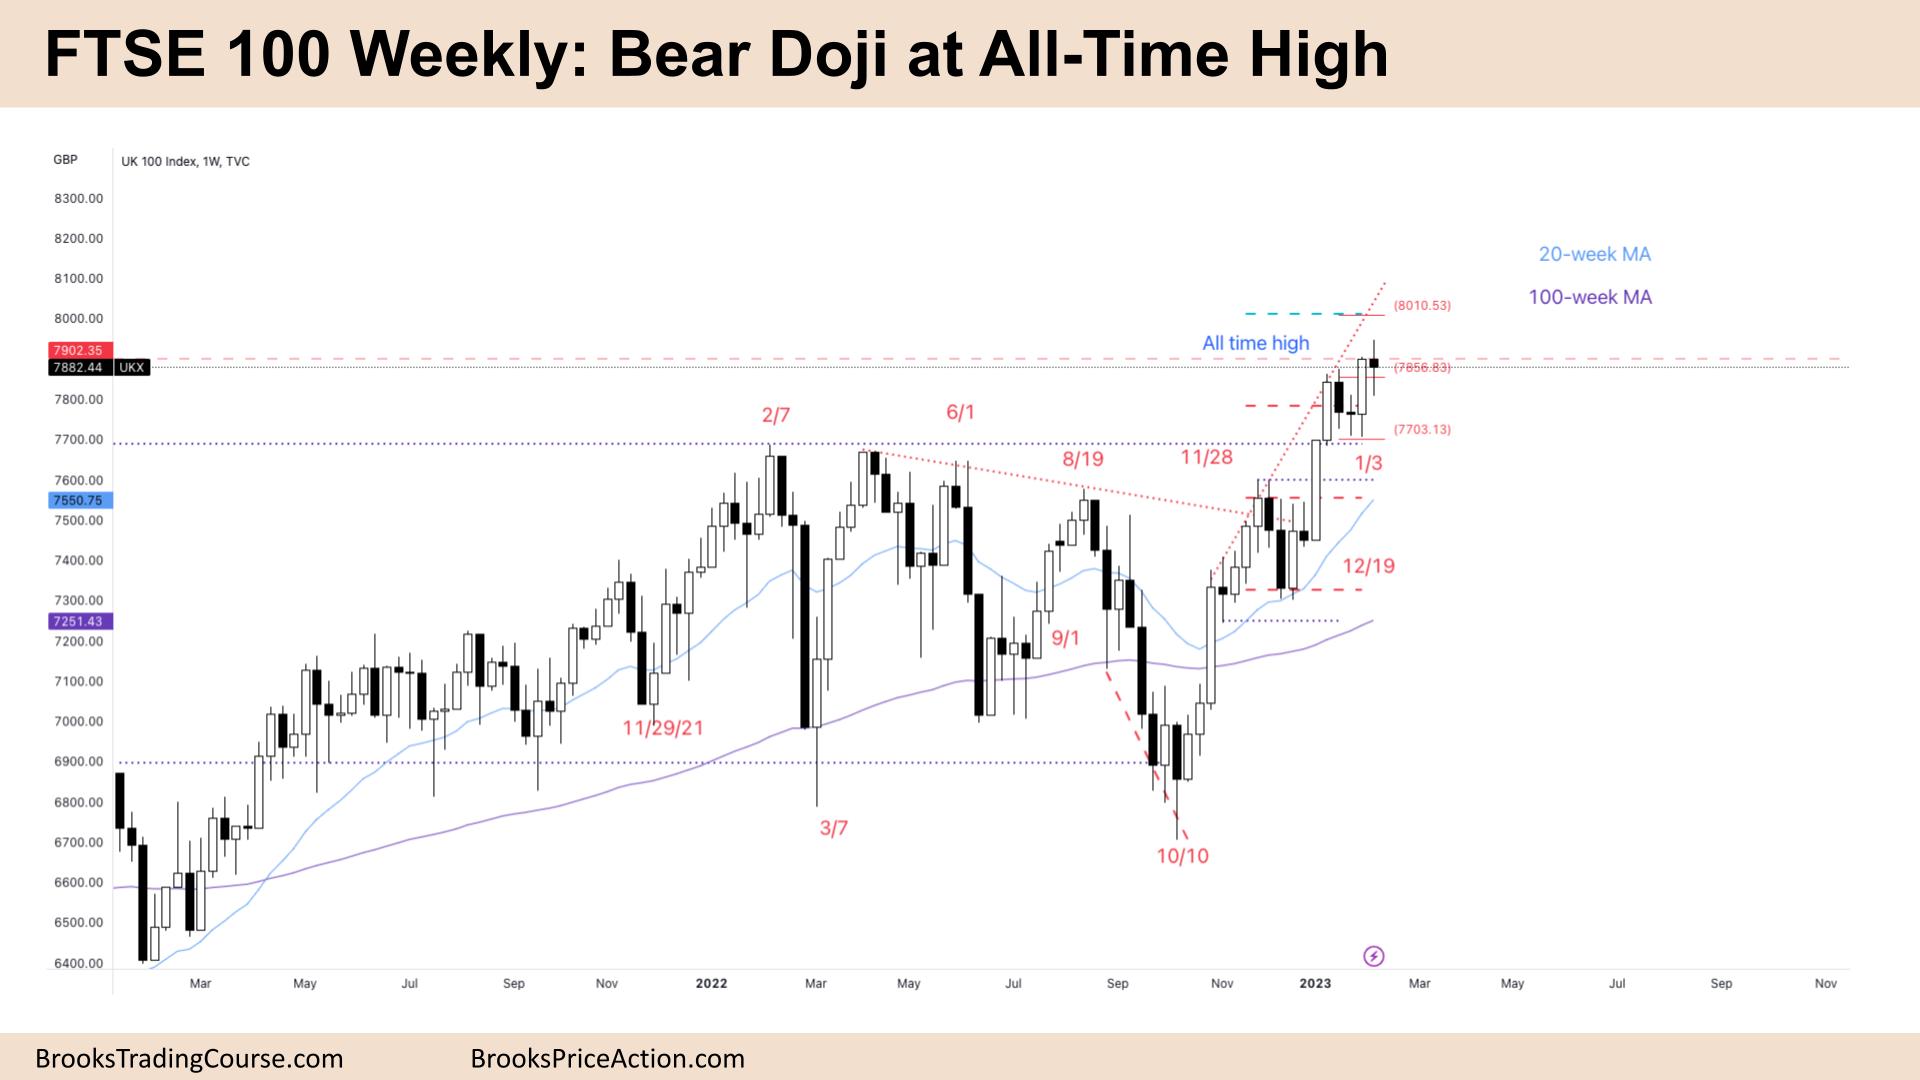 FTSE 100 Bear Doji at All-Time High